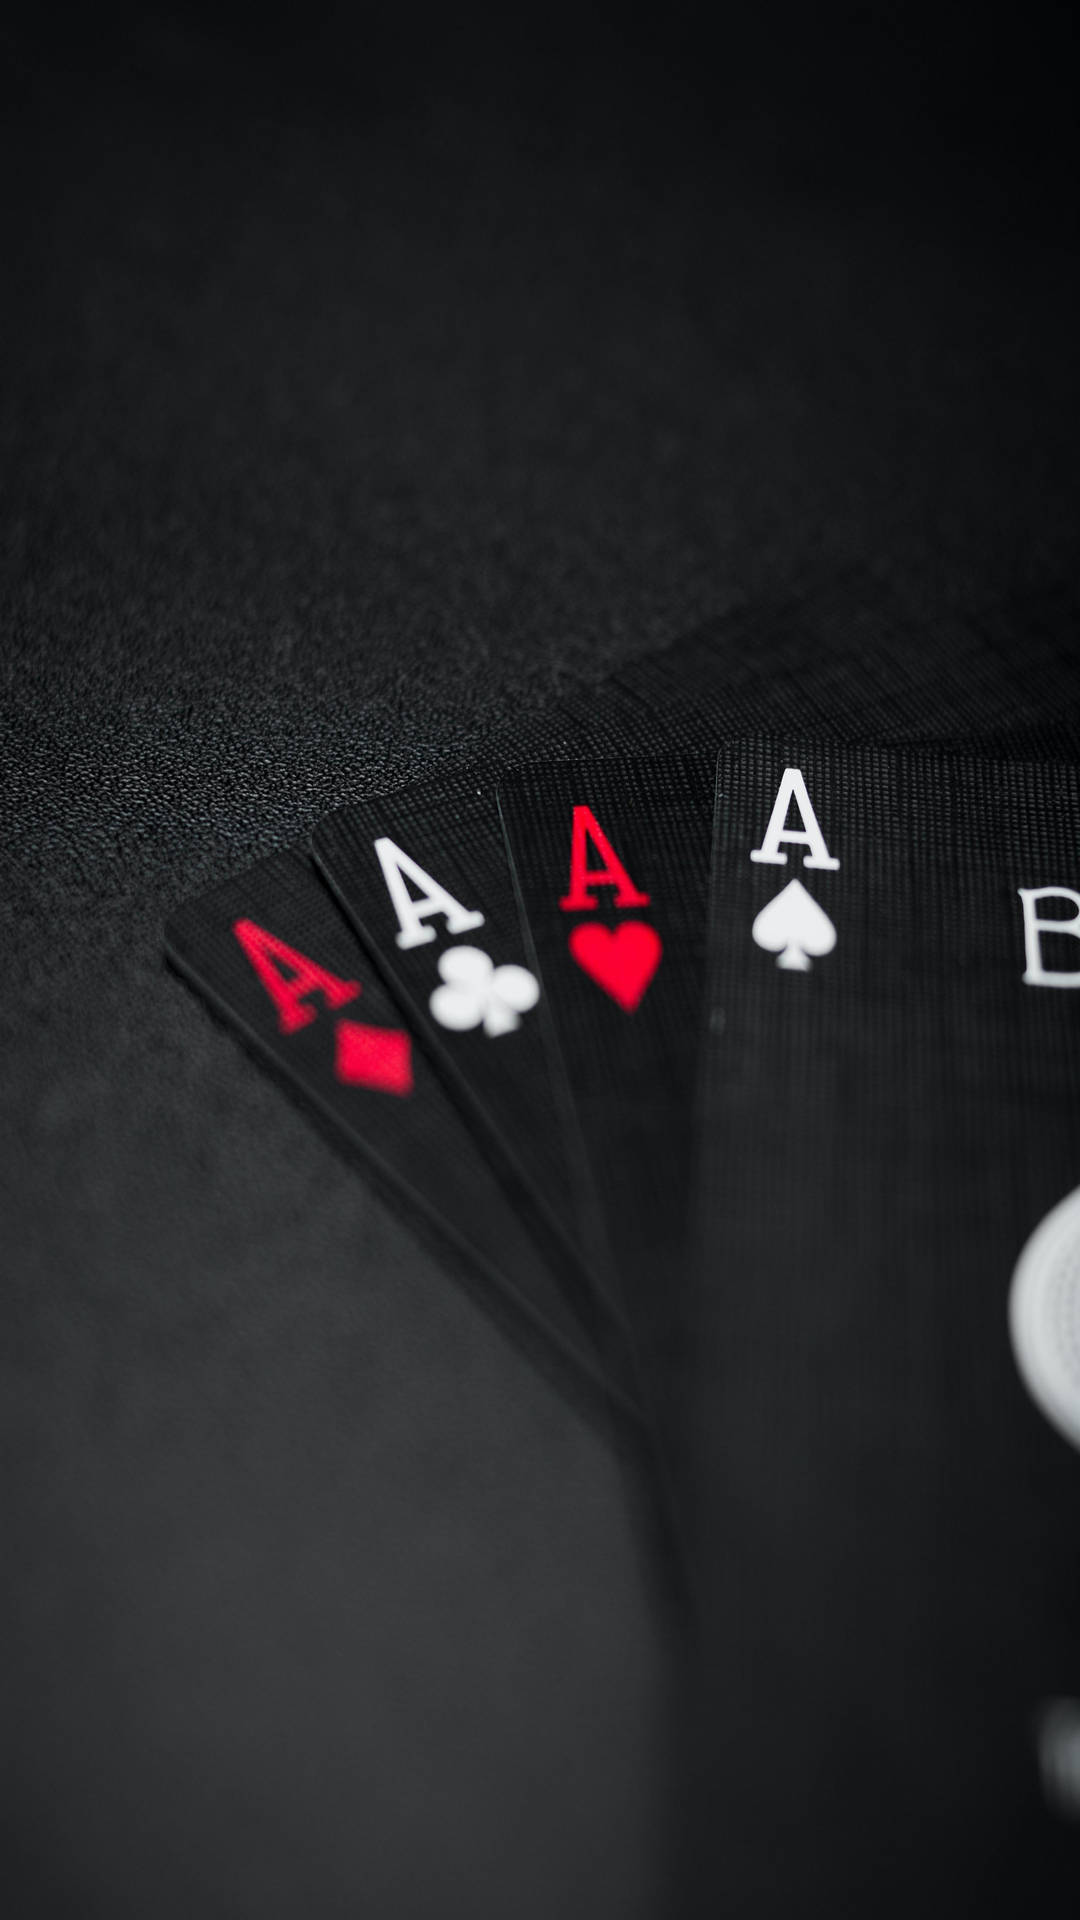 Black Ace Cards Full Hd Phone